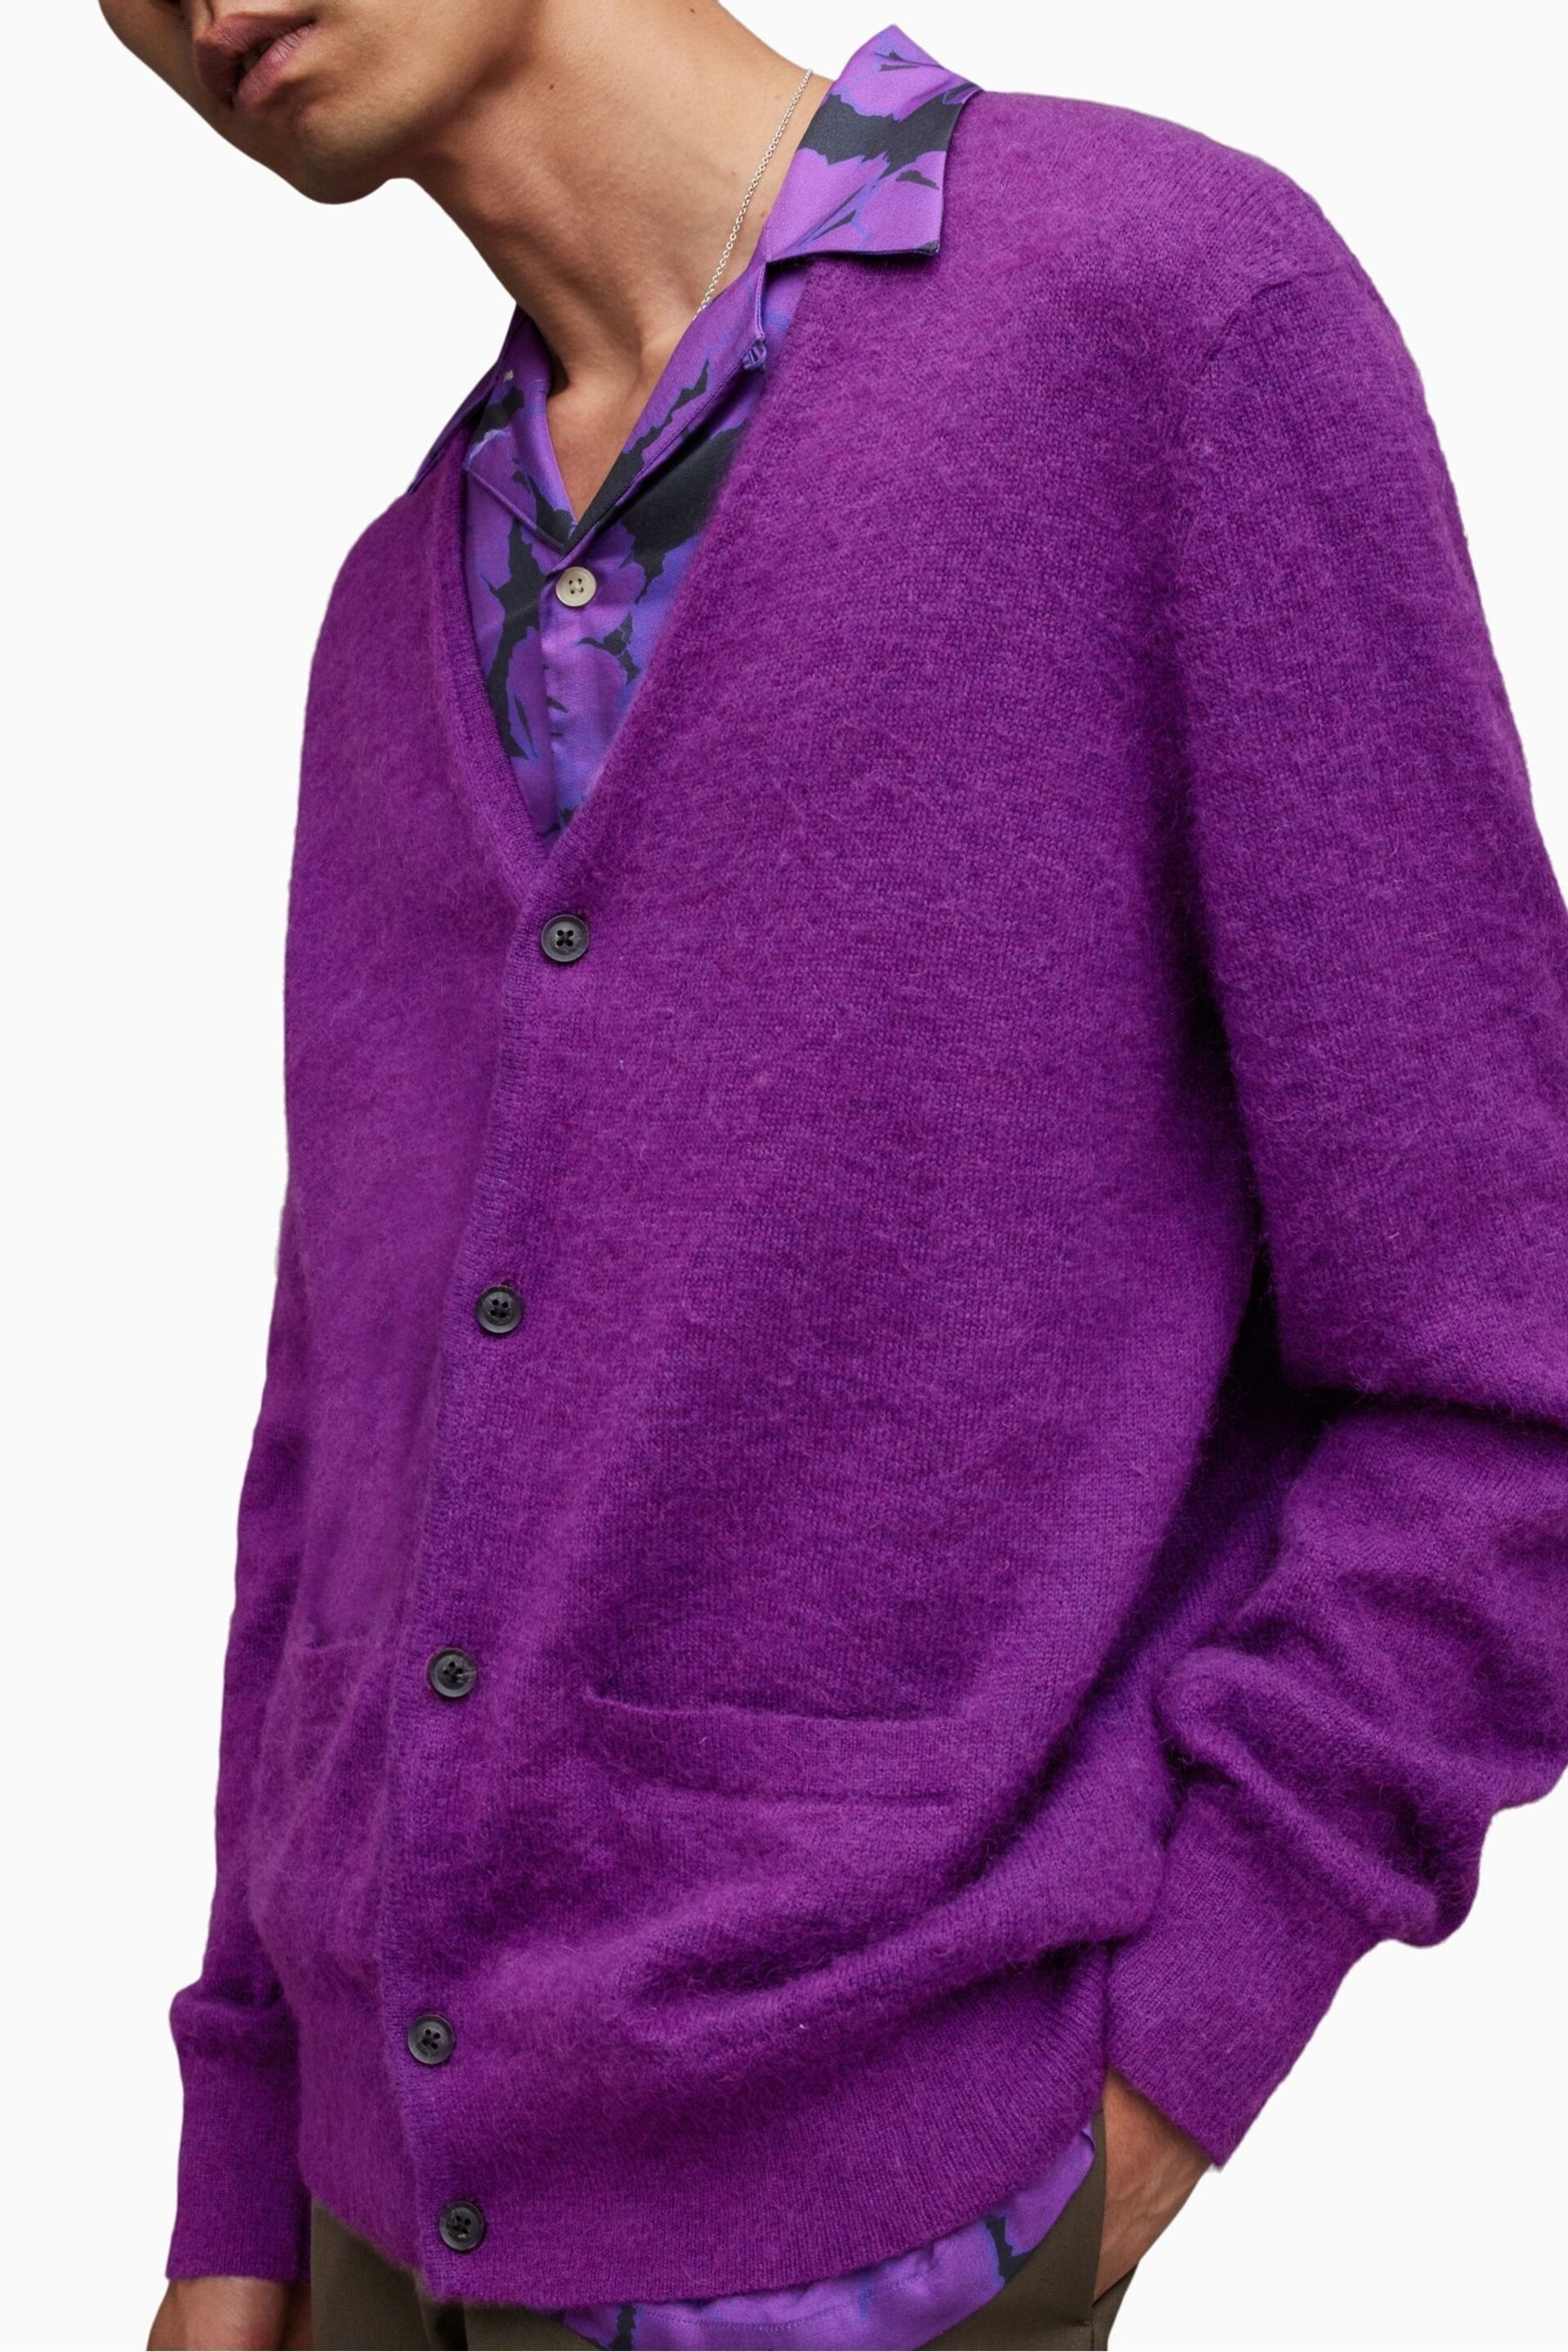 AllSaints Purple Kennedy Cardigan - Image 6 of 8